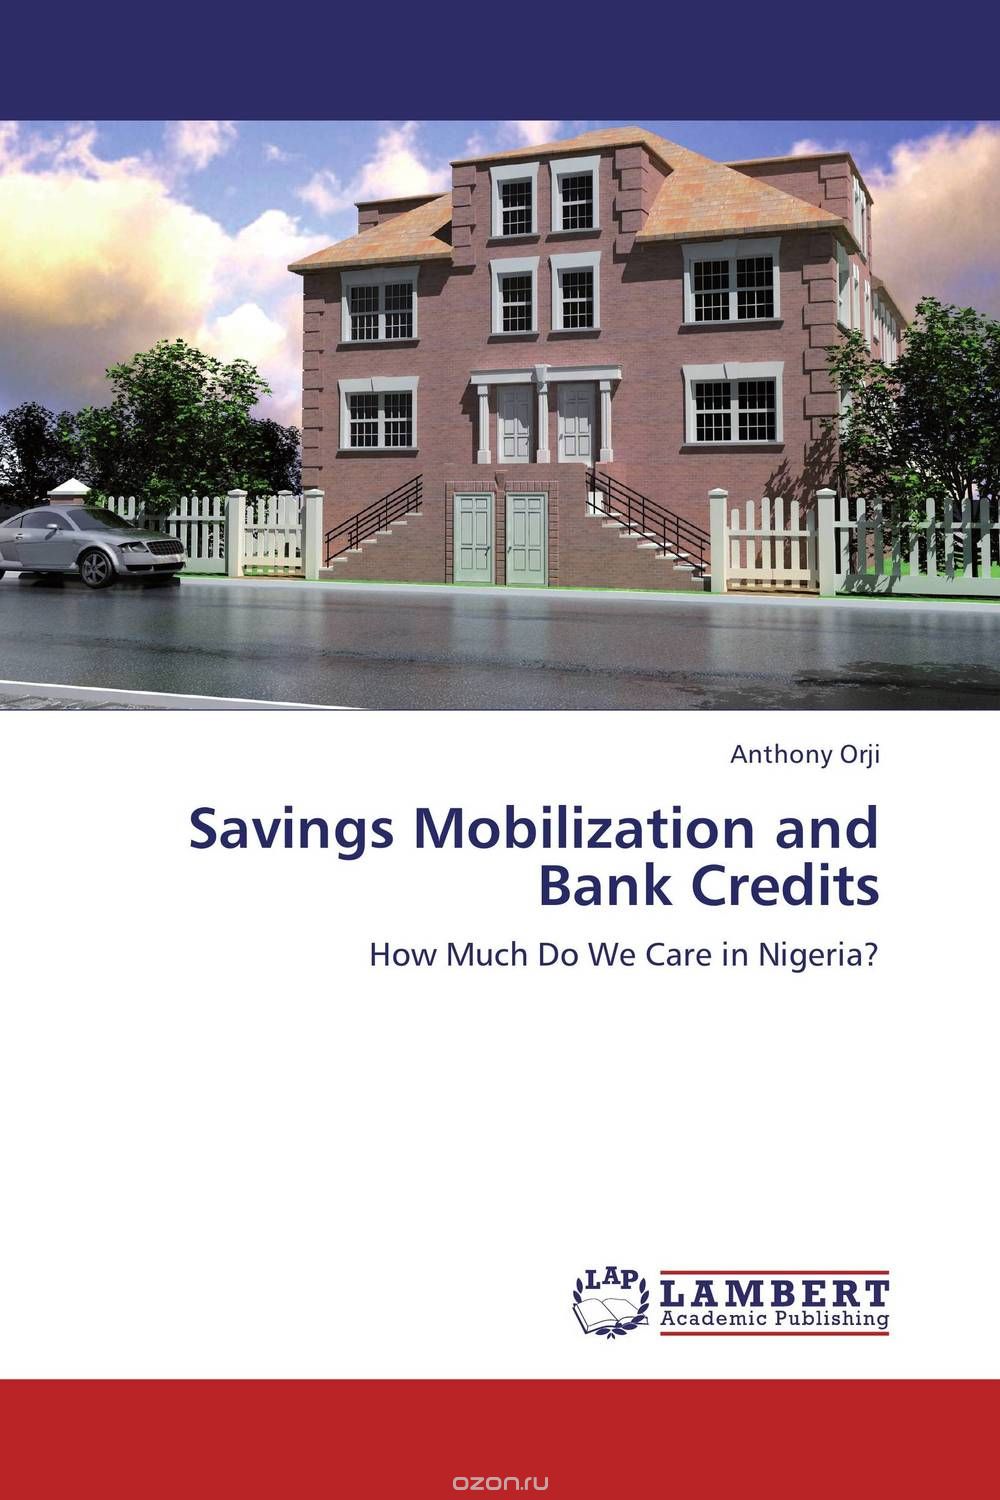 Скачать книгу "Savings Mobilization and Bank Credits"